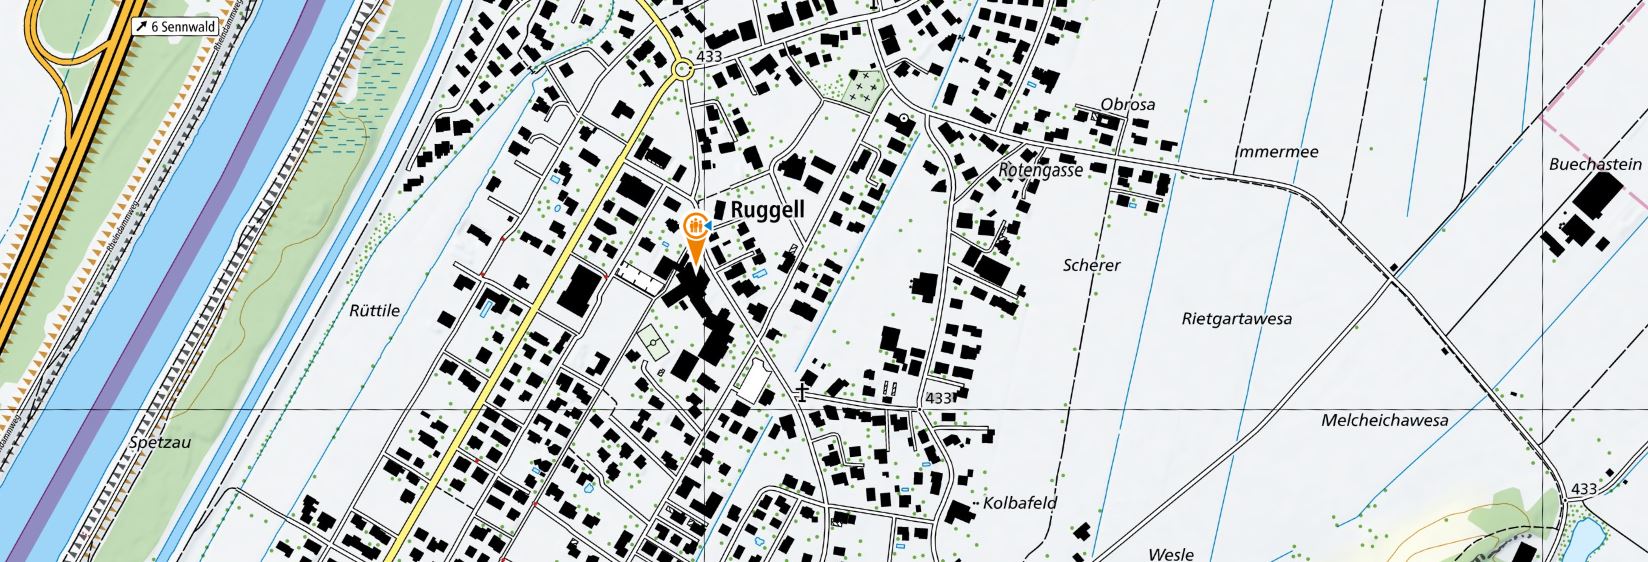 Karte-zum-Gemeindesaal-Ruggell.JPG